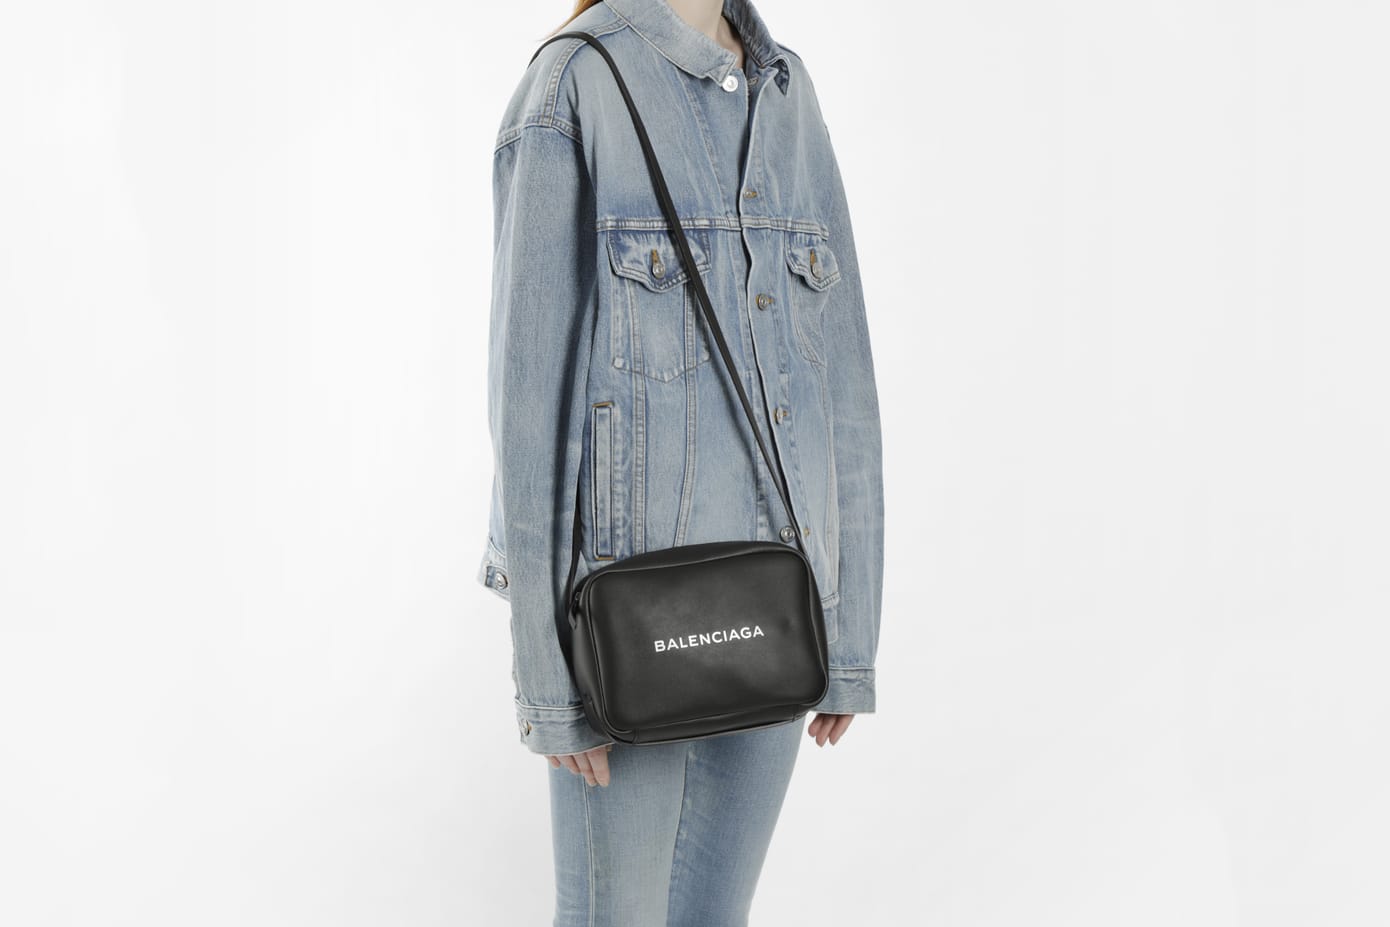 Balenciaga's Shoulder Bag Is a Simple Crossbody | HYPEBAE